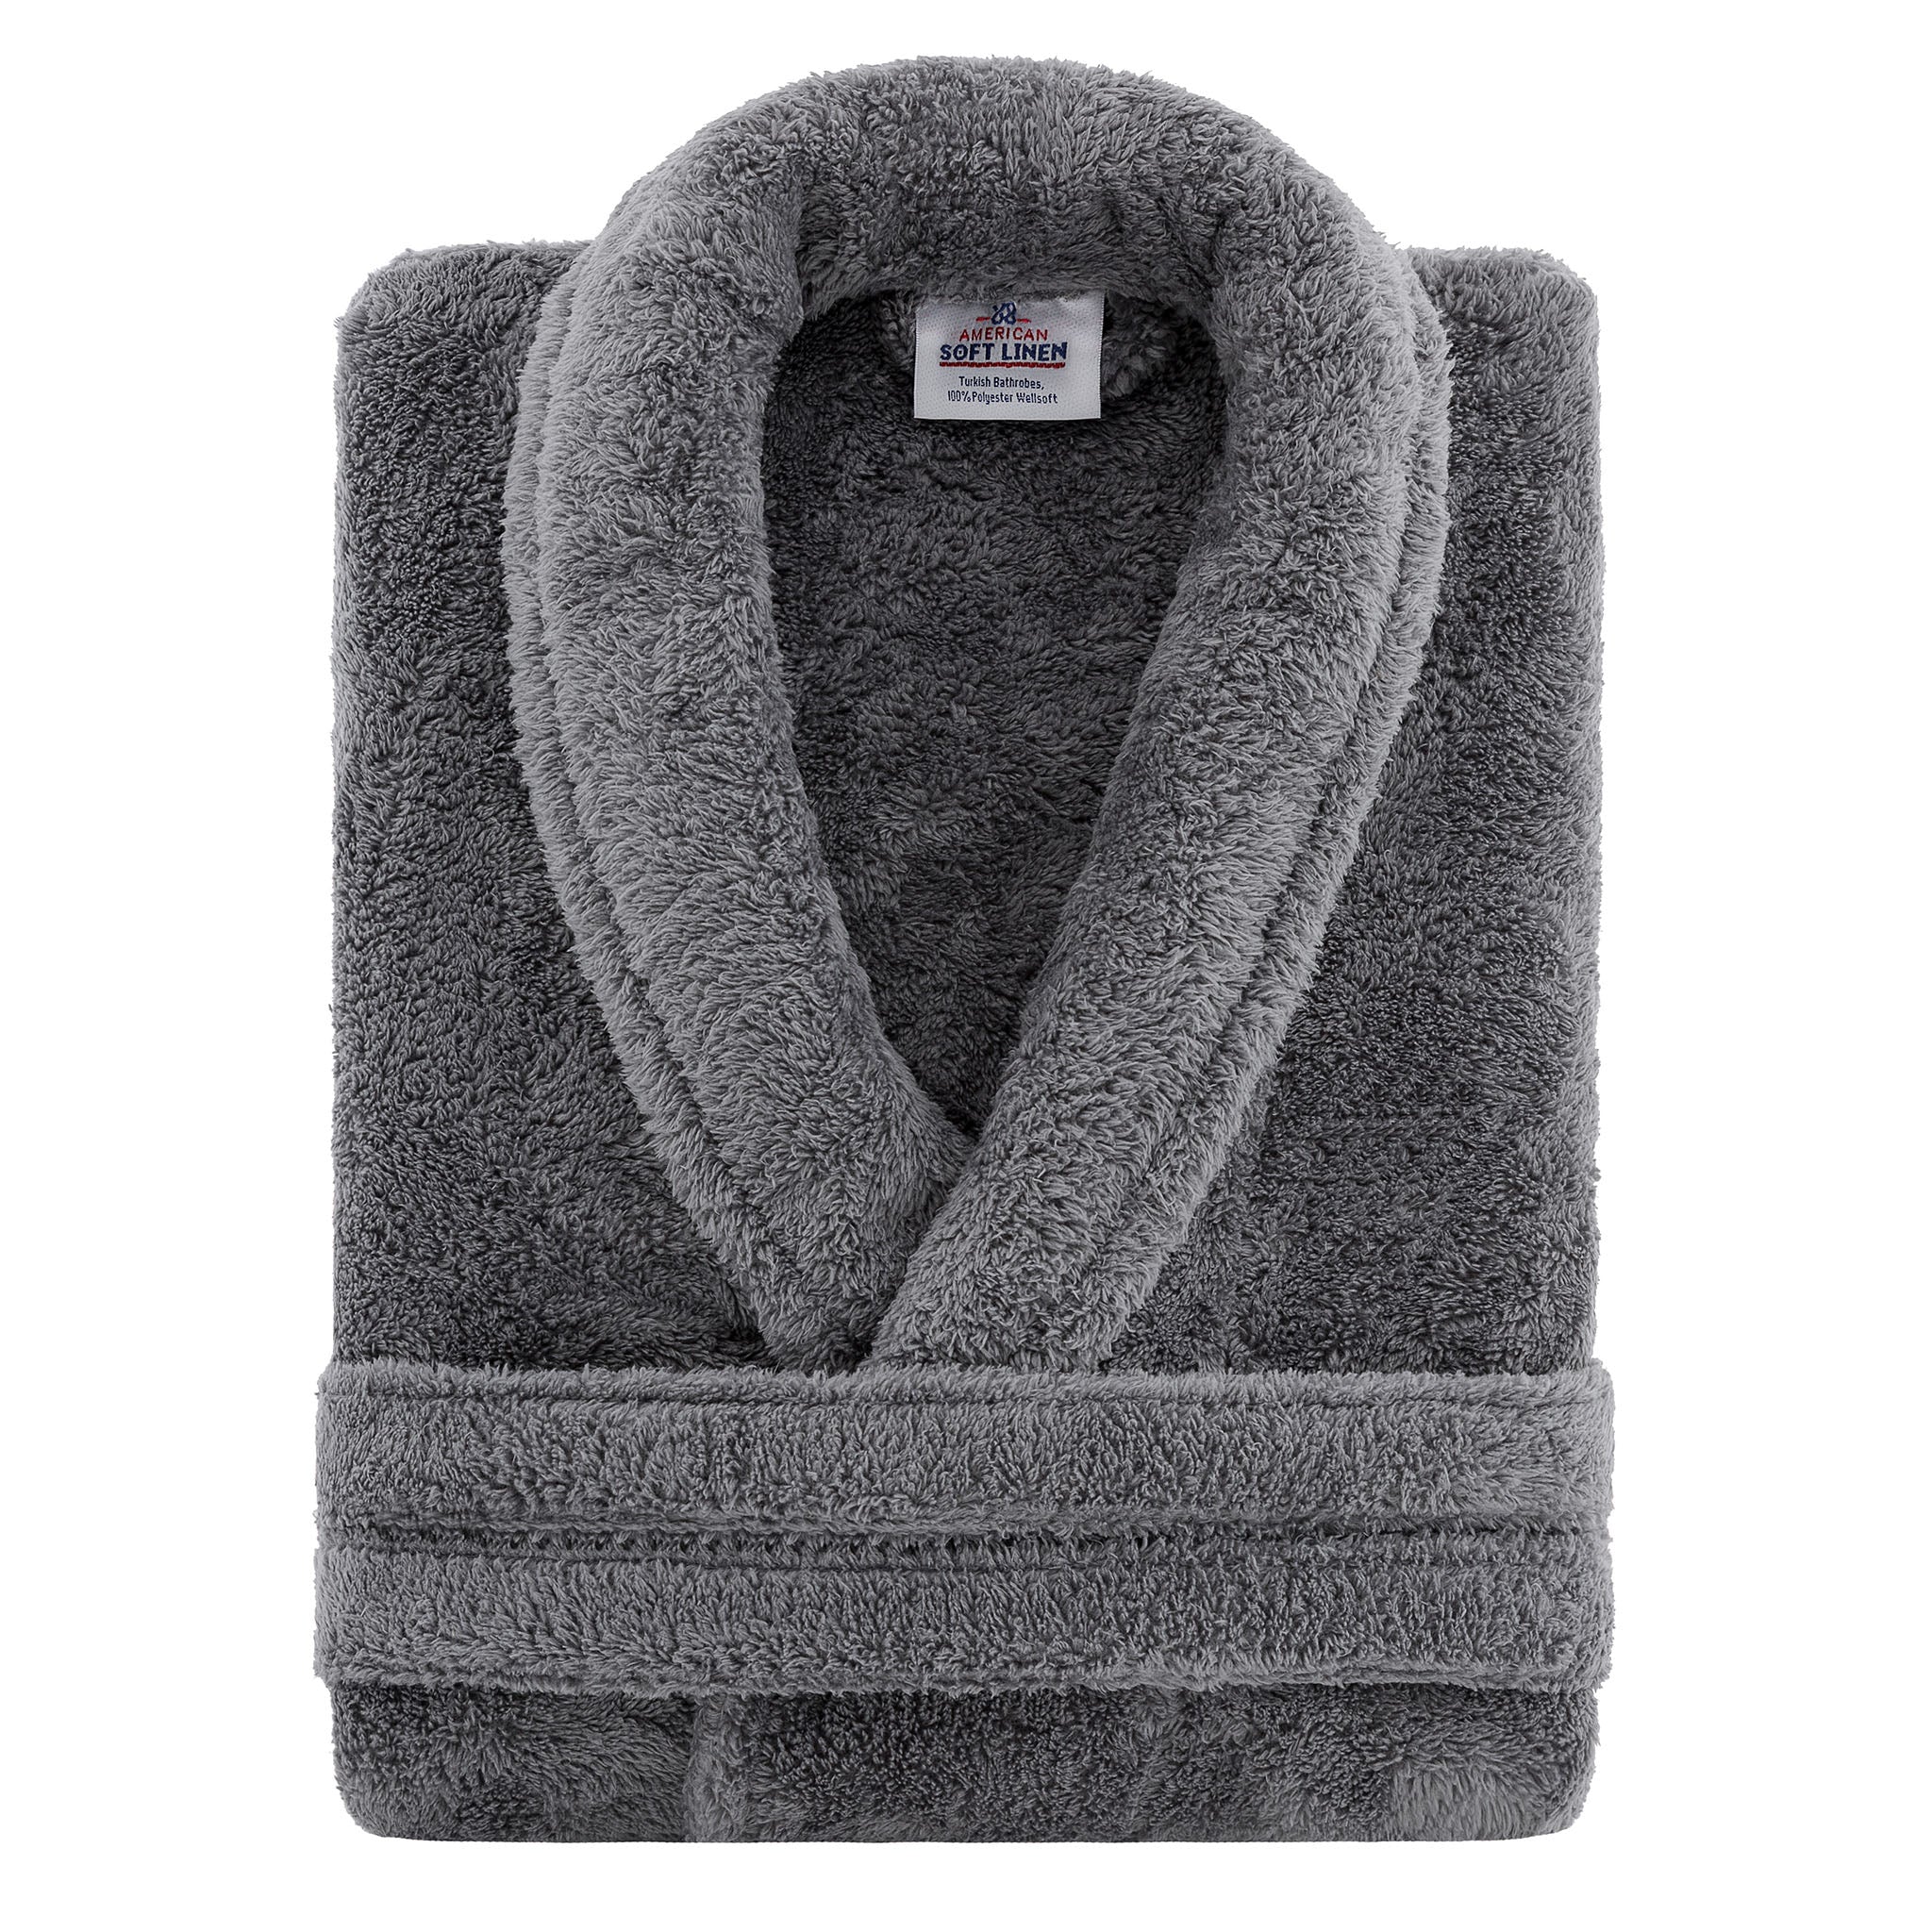 American Soft Linen Super Soft Absorbent and Fluffy Unisex Fleece Bathrobe -12 Set Case Pack -L-XL-gray-3